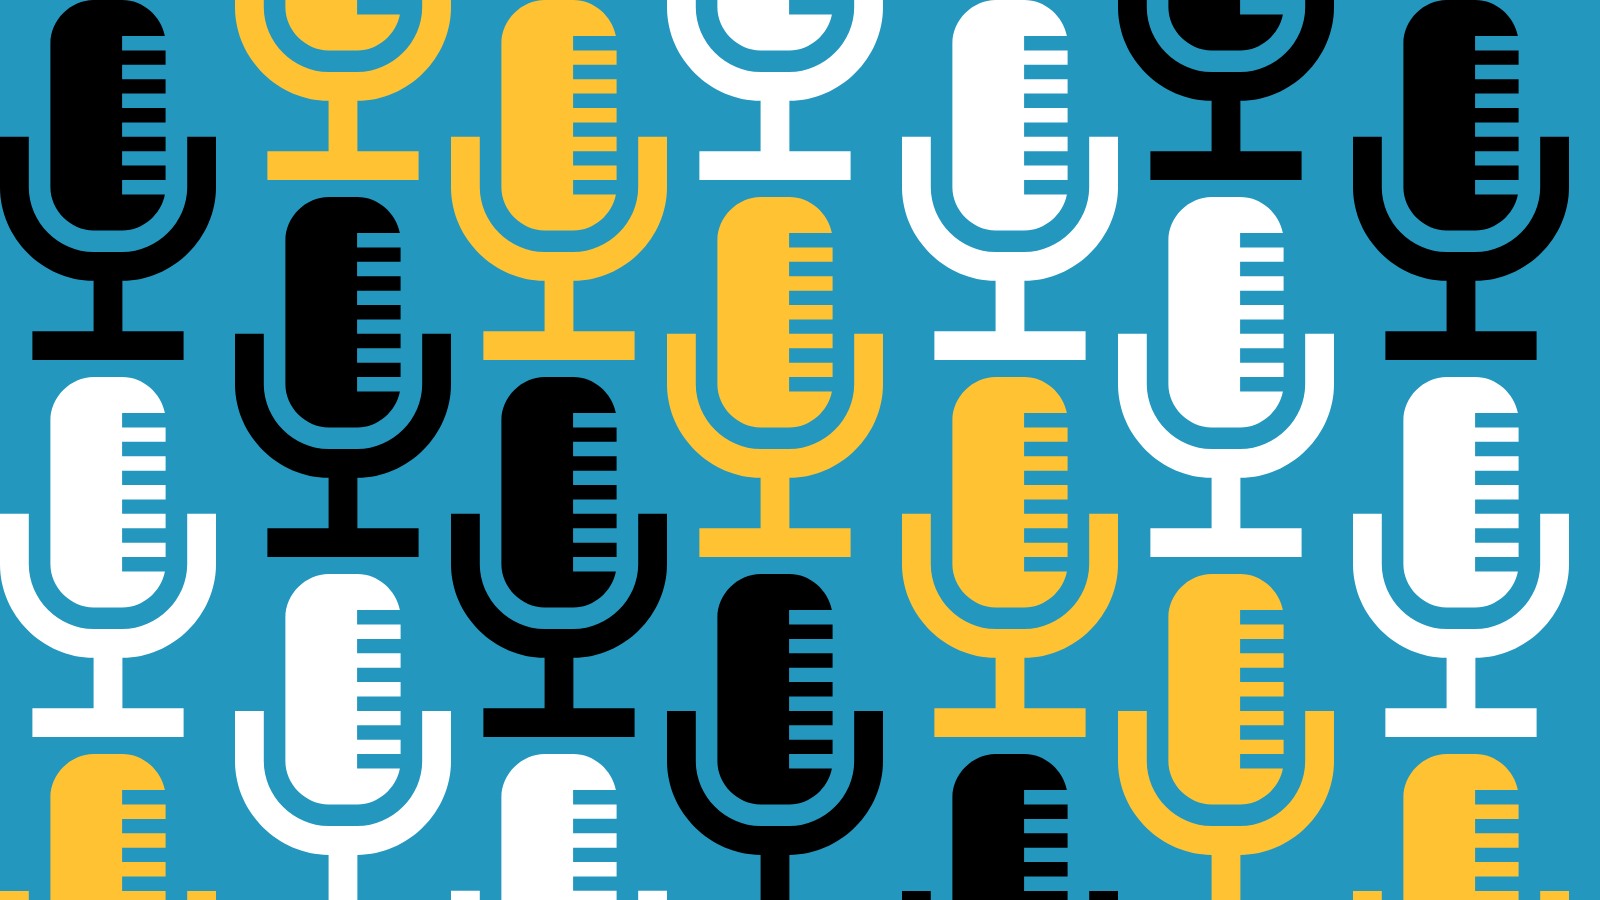 A repeating pattern of desktop microphones